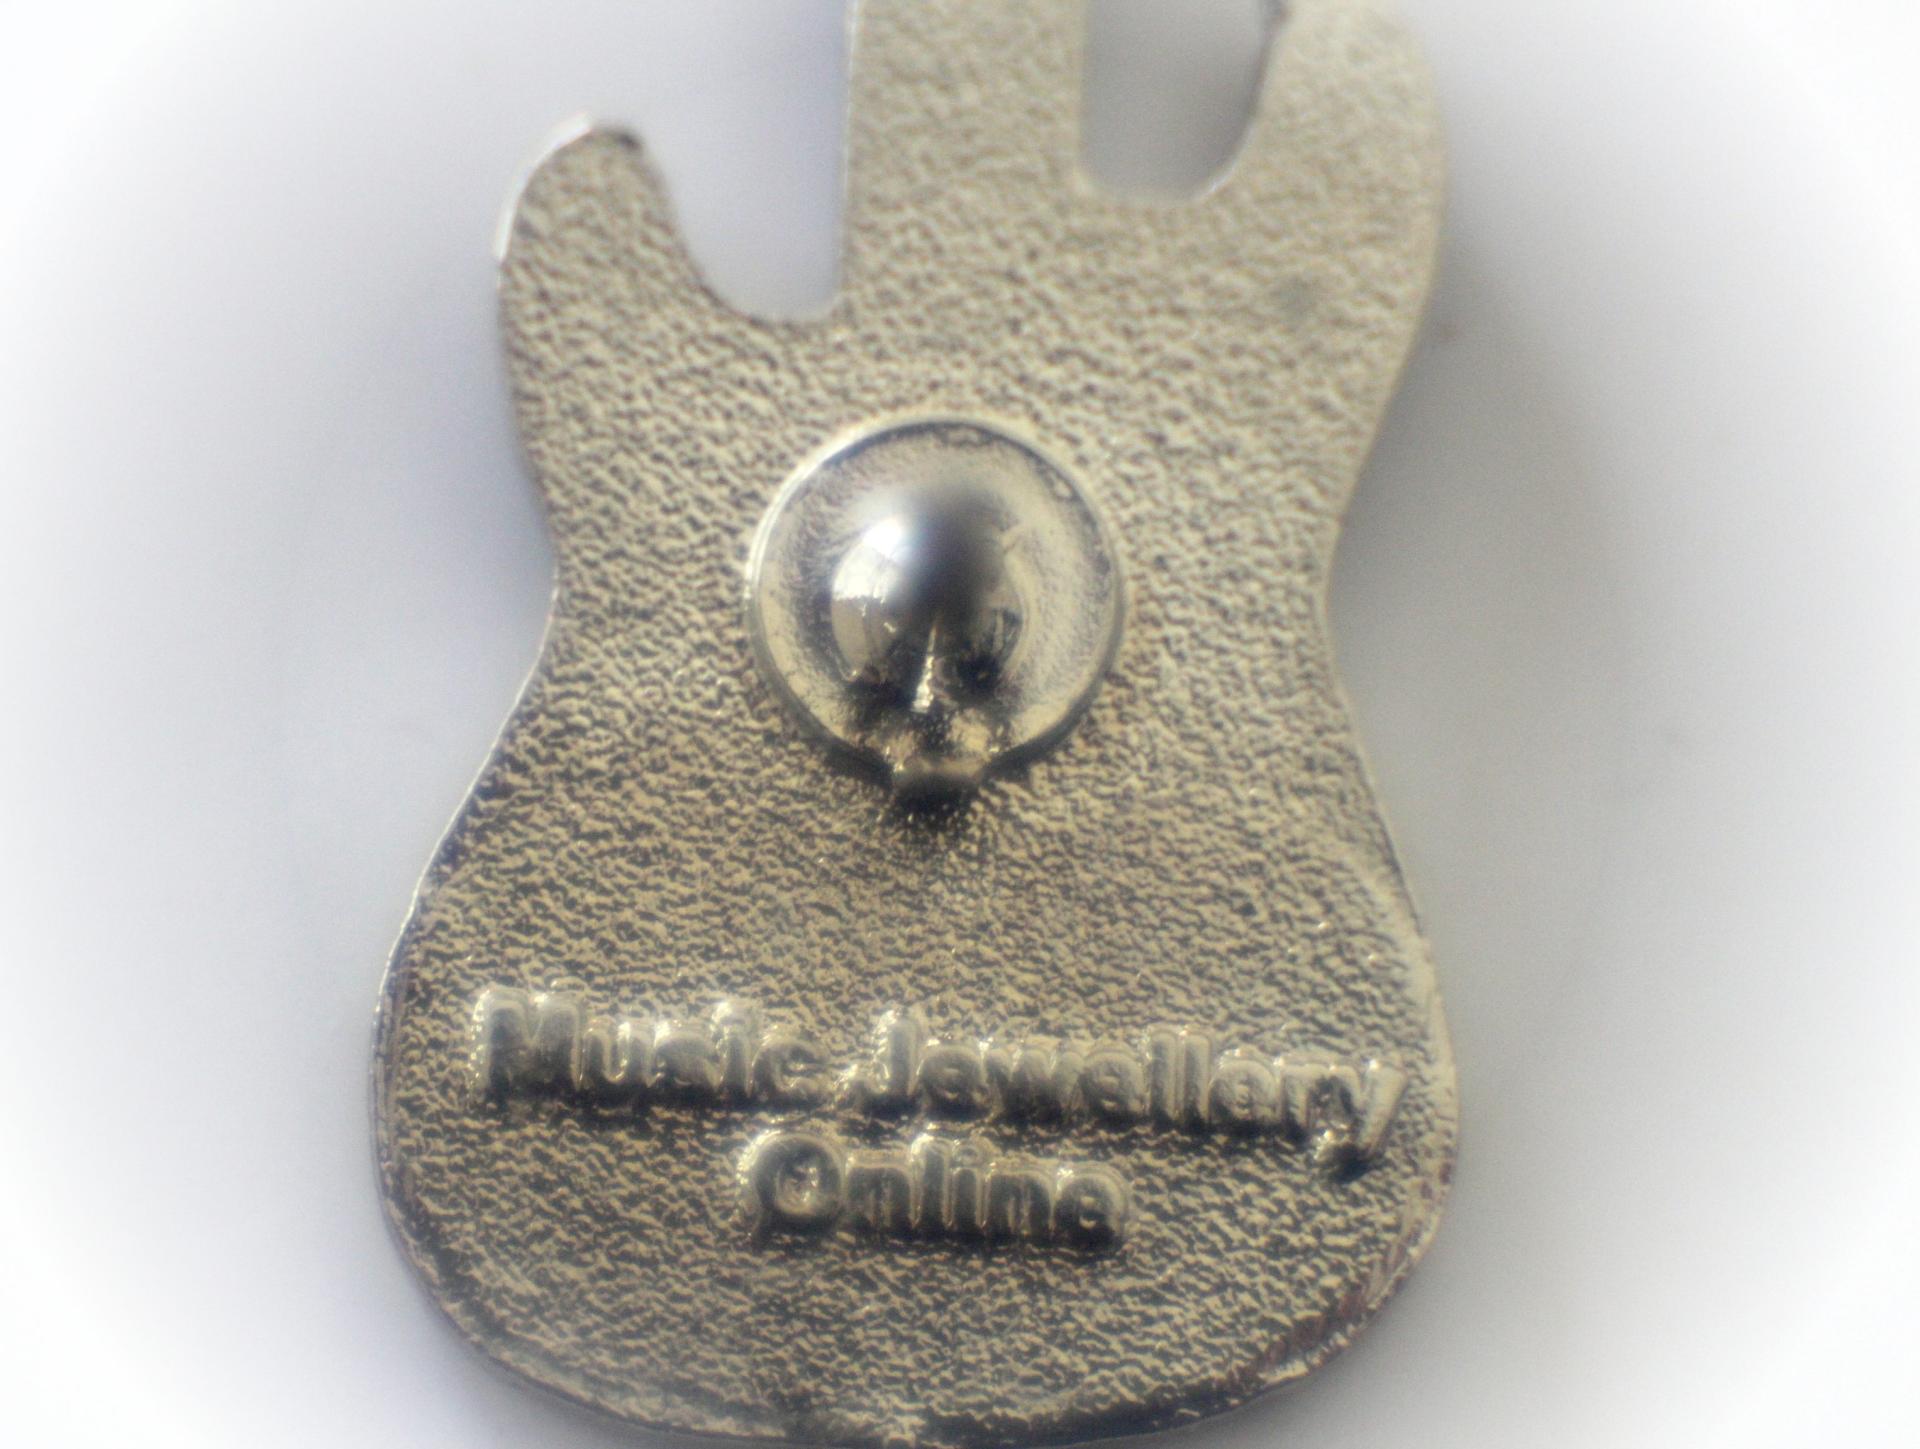 Music Jewellery Online - Fender Style Guitar Pin Badge Range